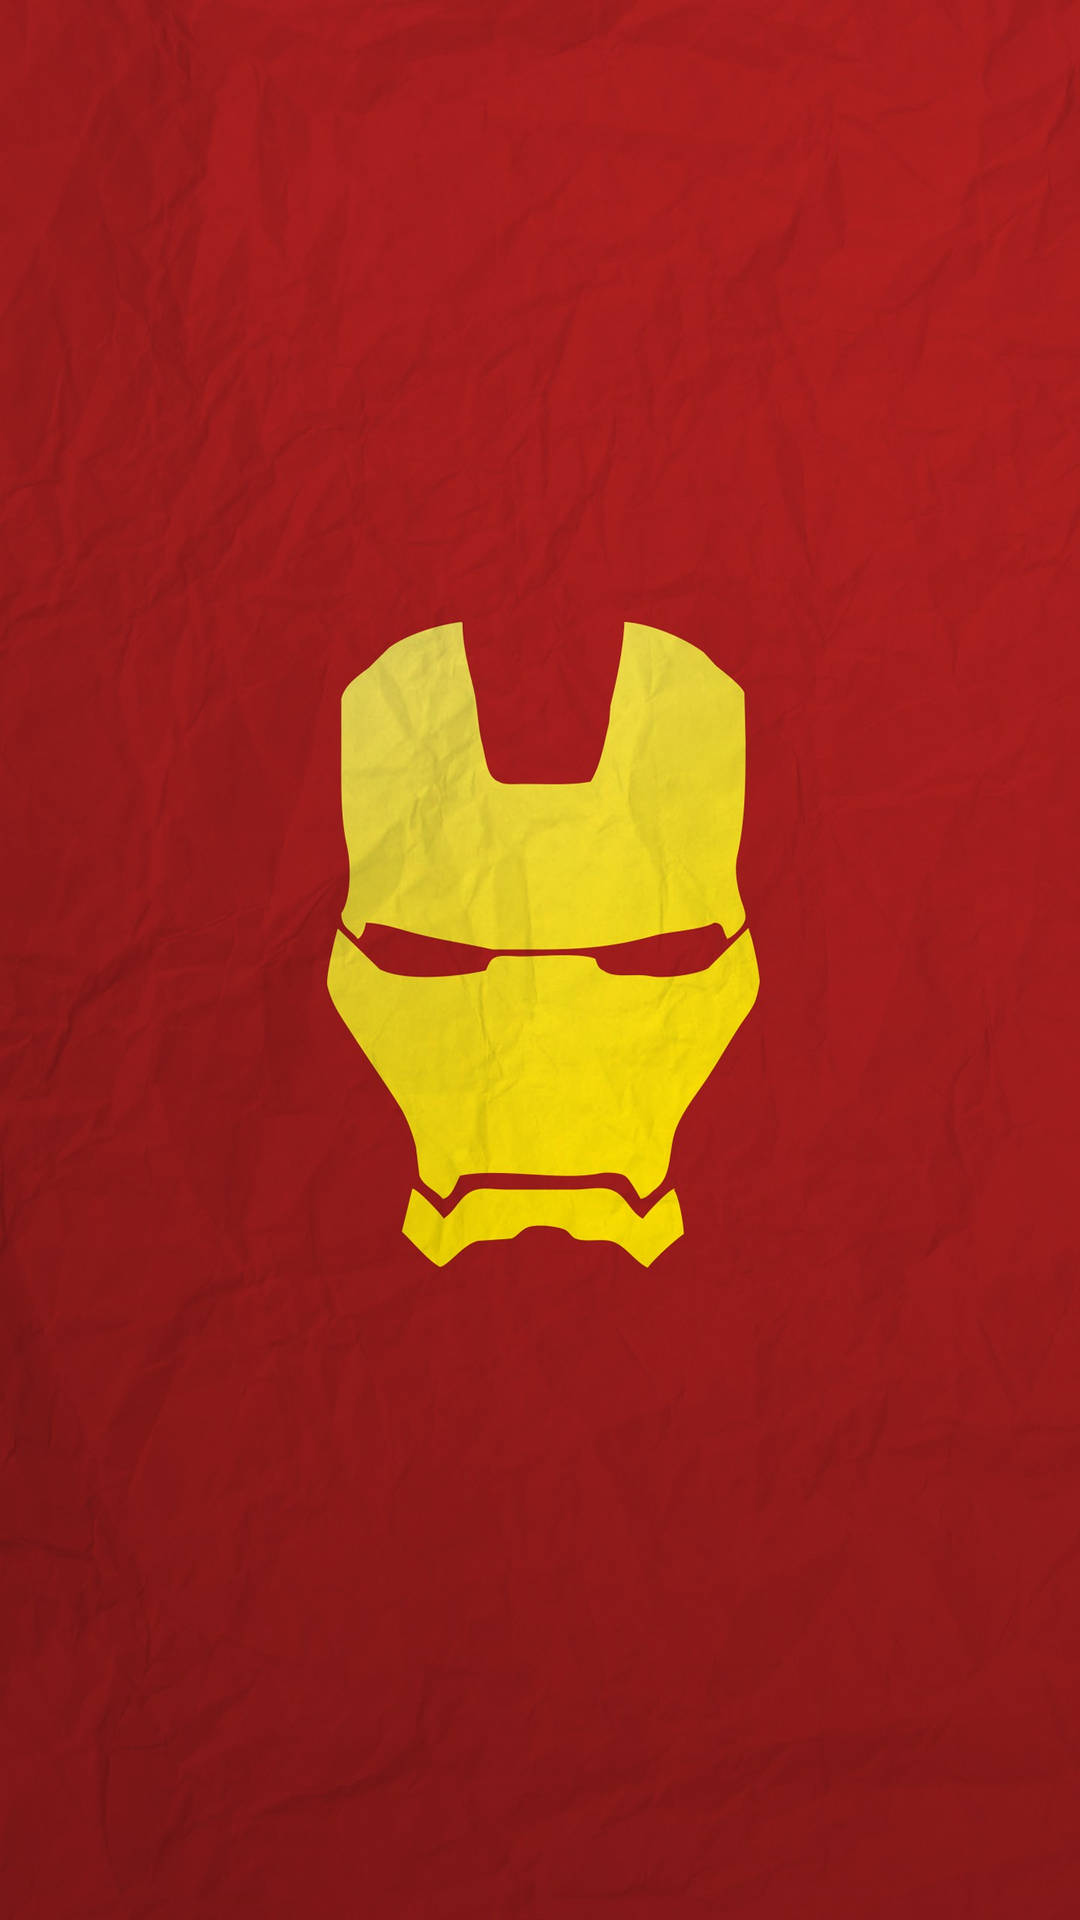 Minimalistischeshd Iron Man Superhelden Wallpaper